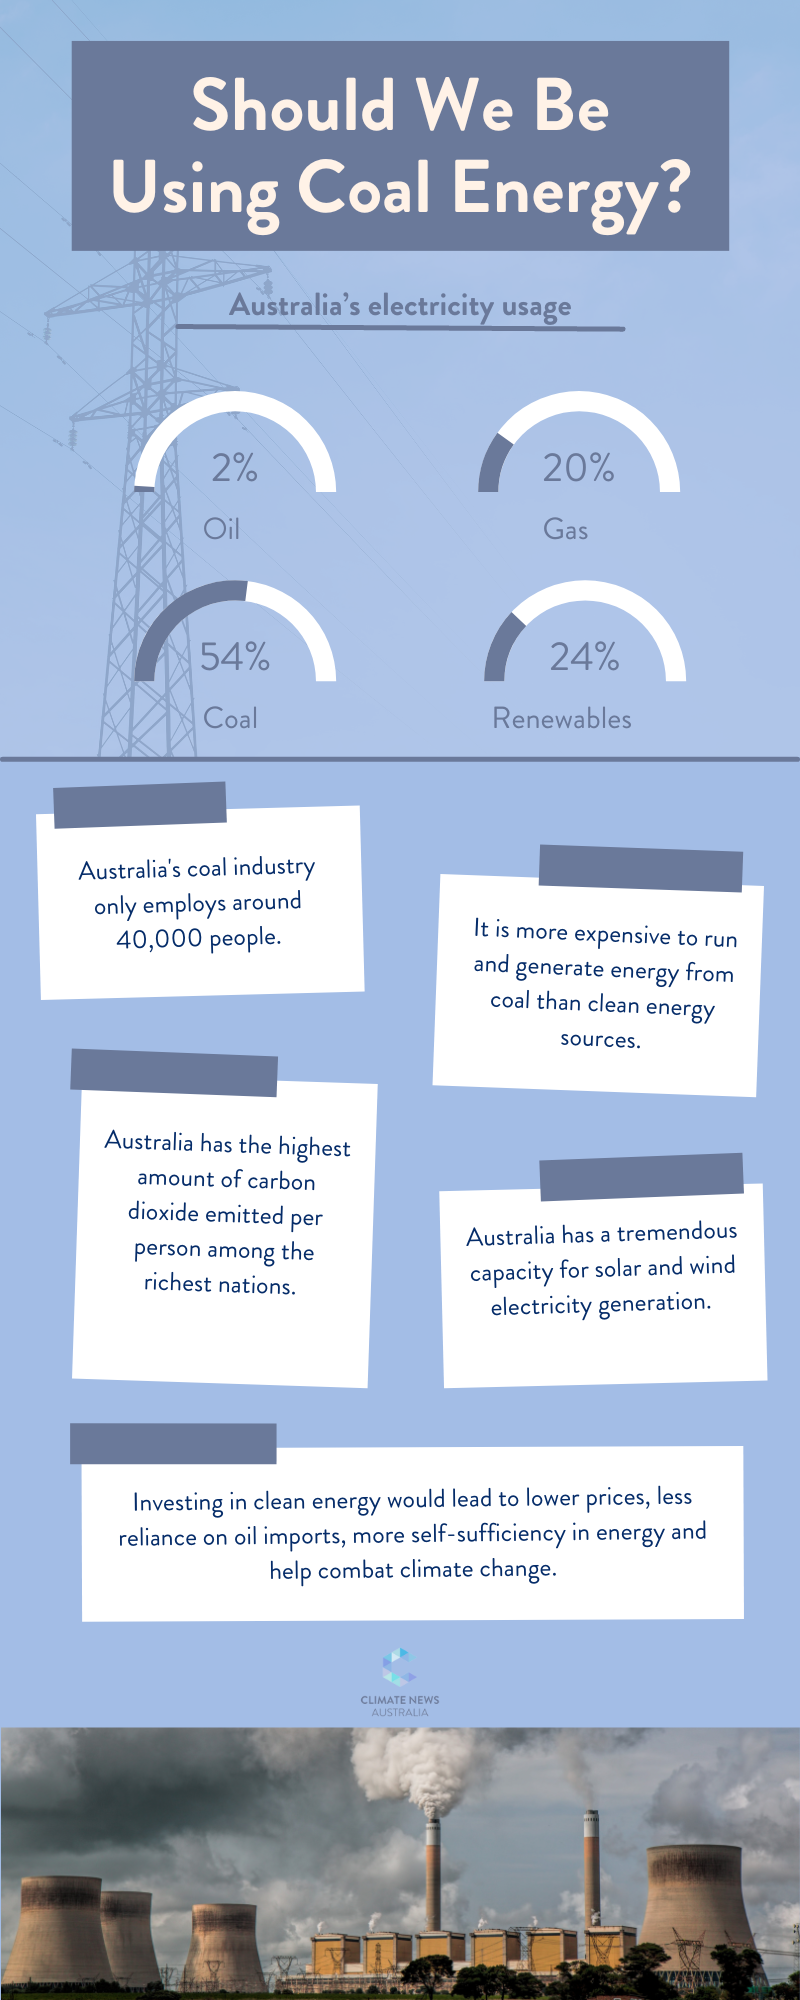 Infographic regarding if we should use coal energy